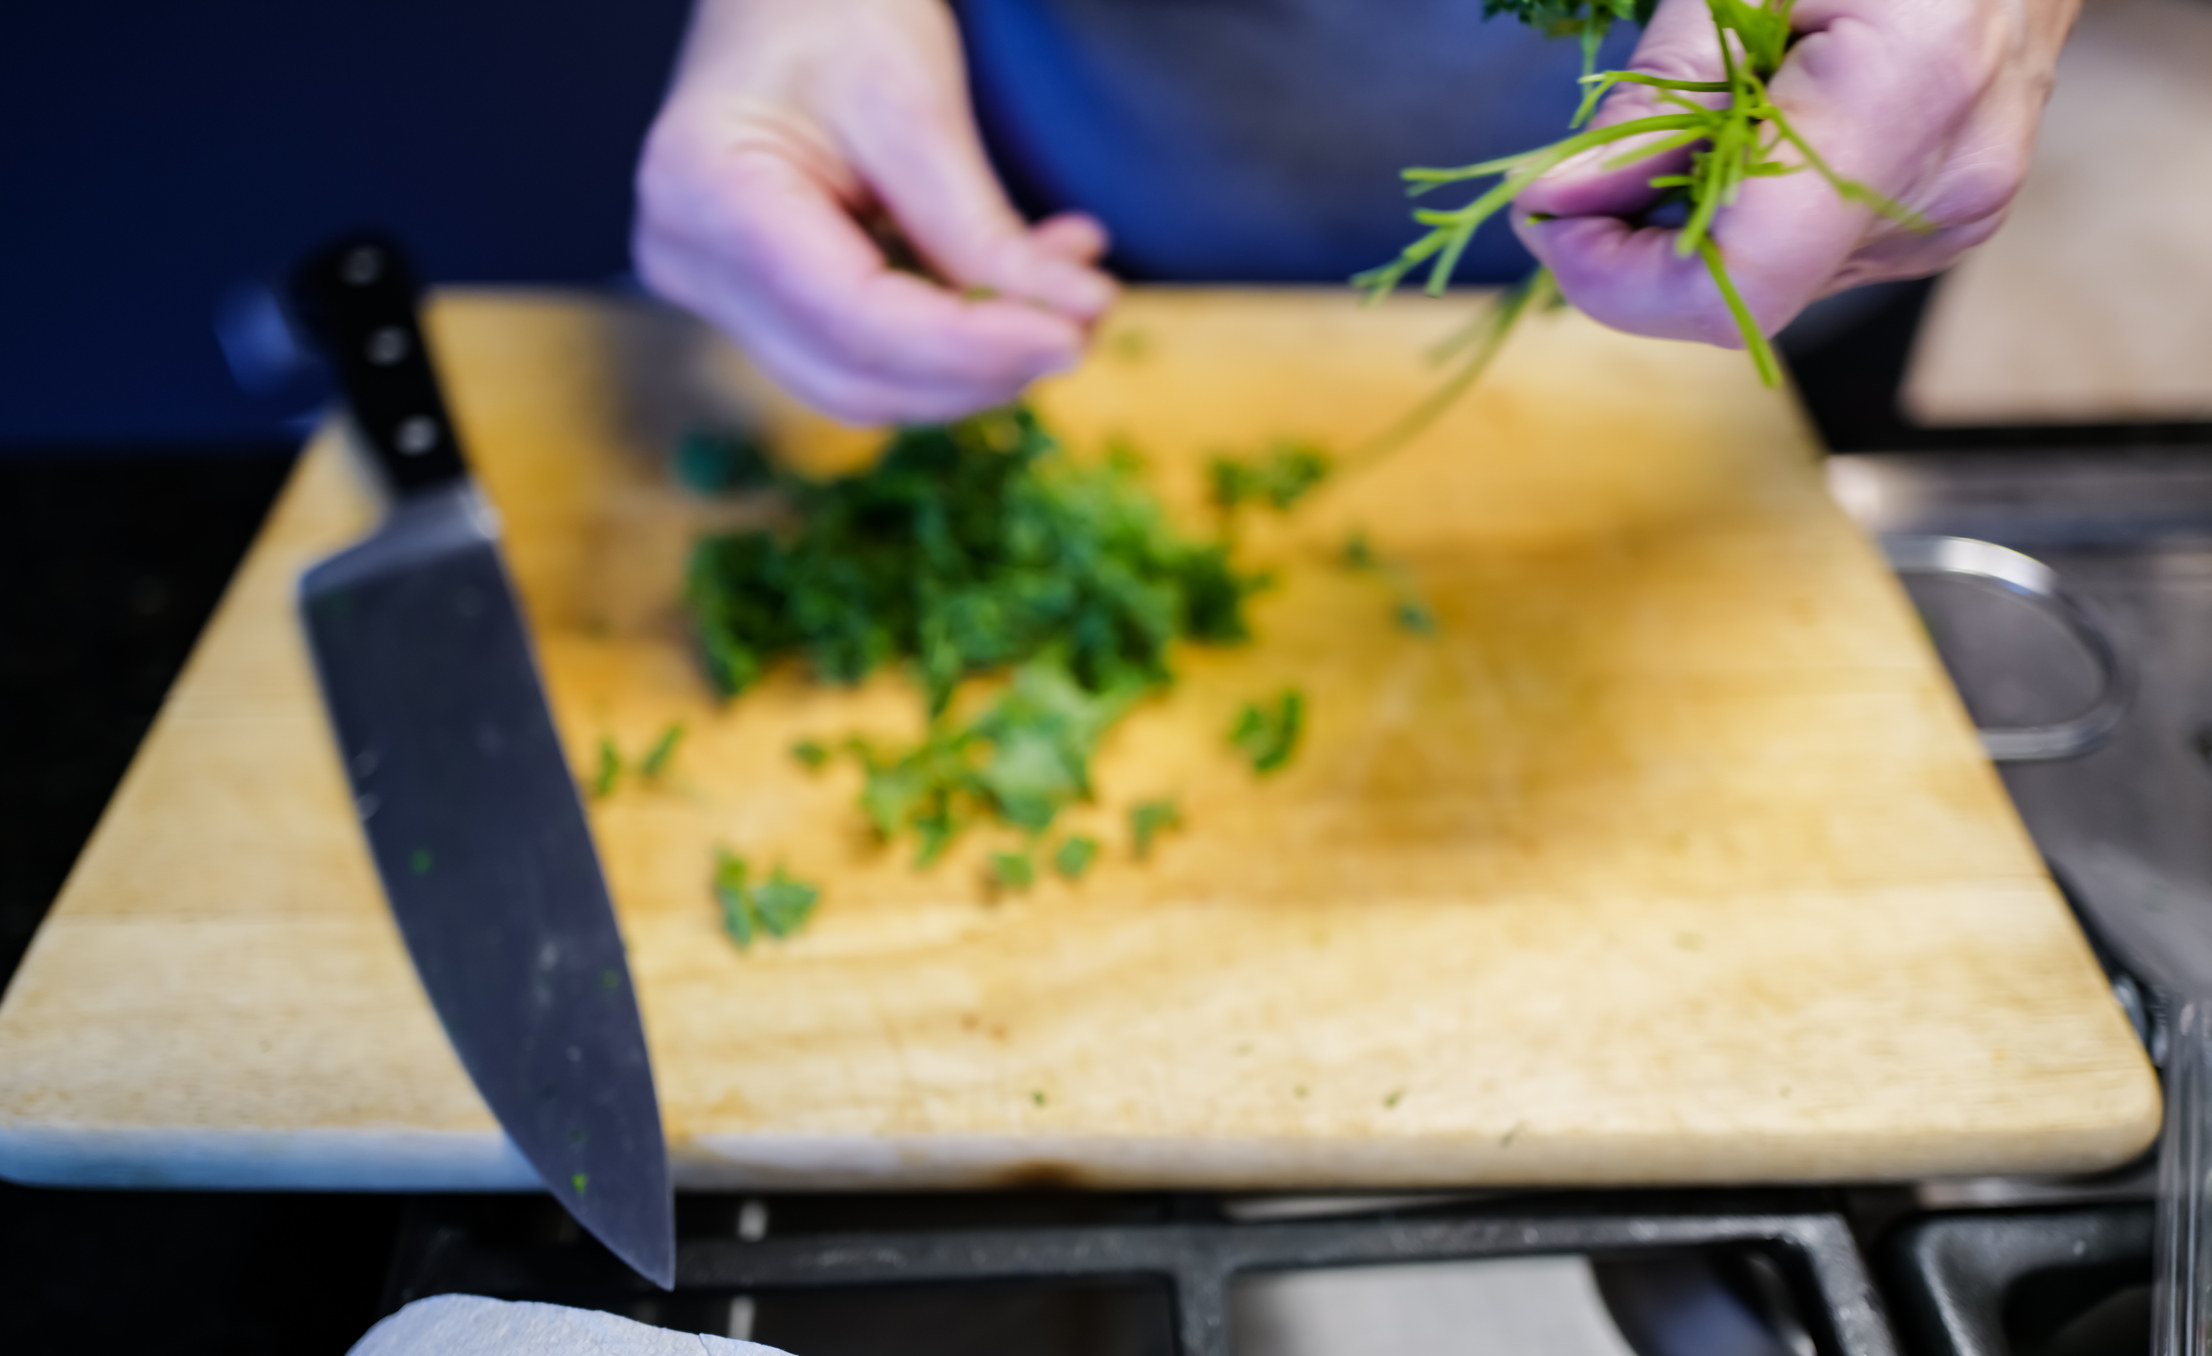 A person cutting herbs on a cutting board